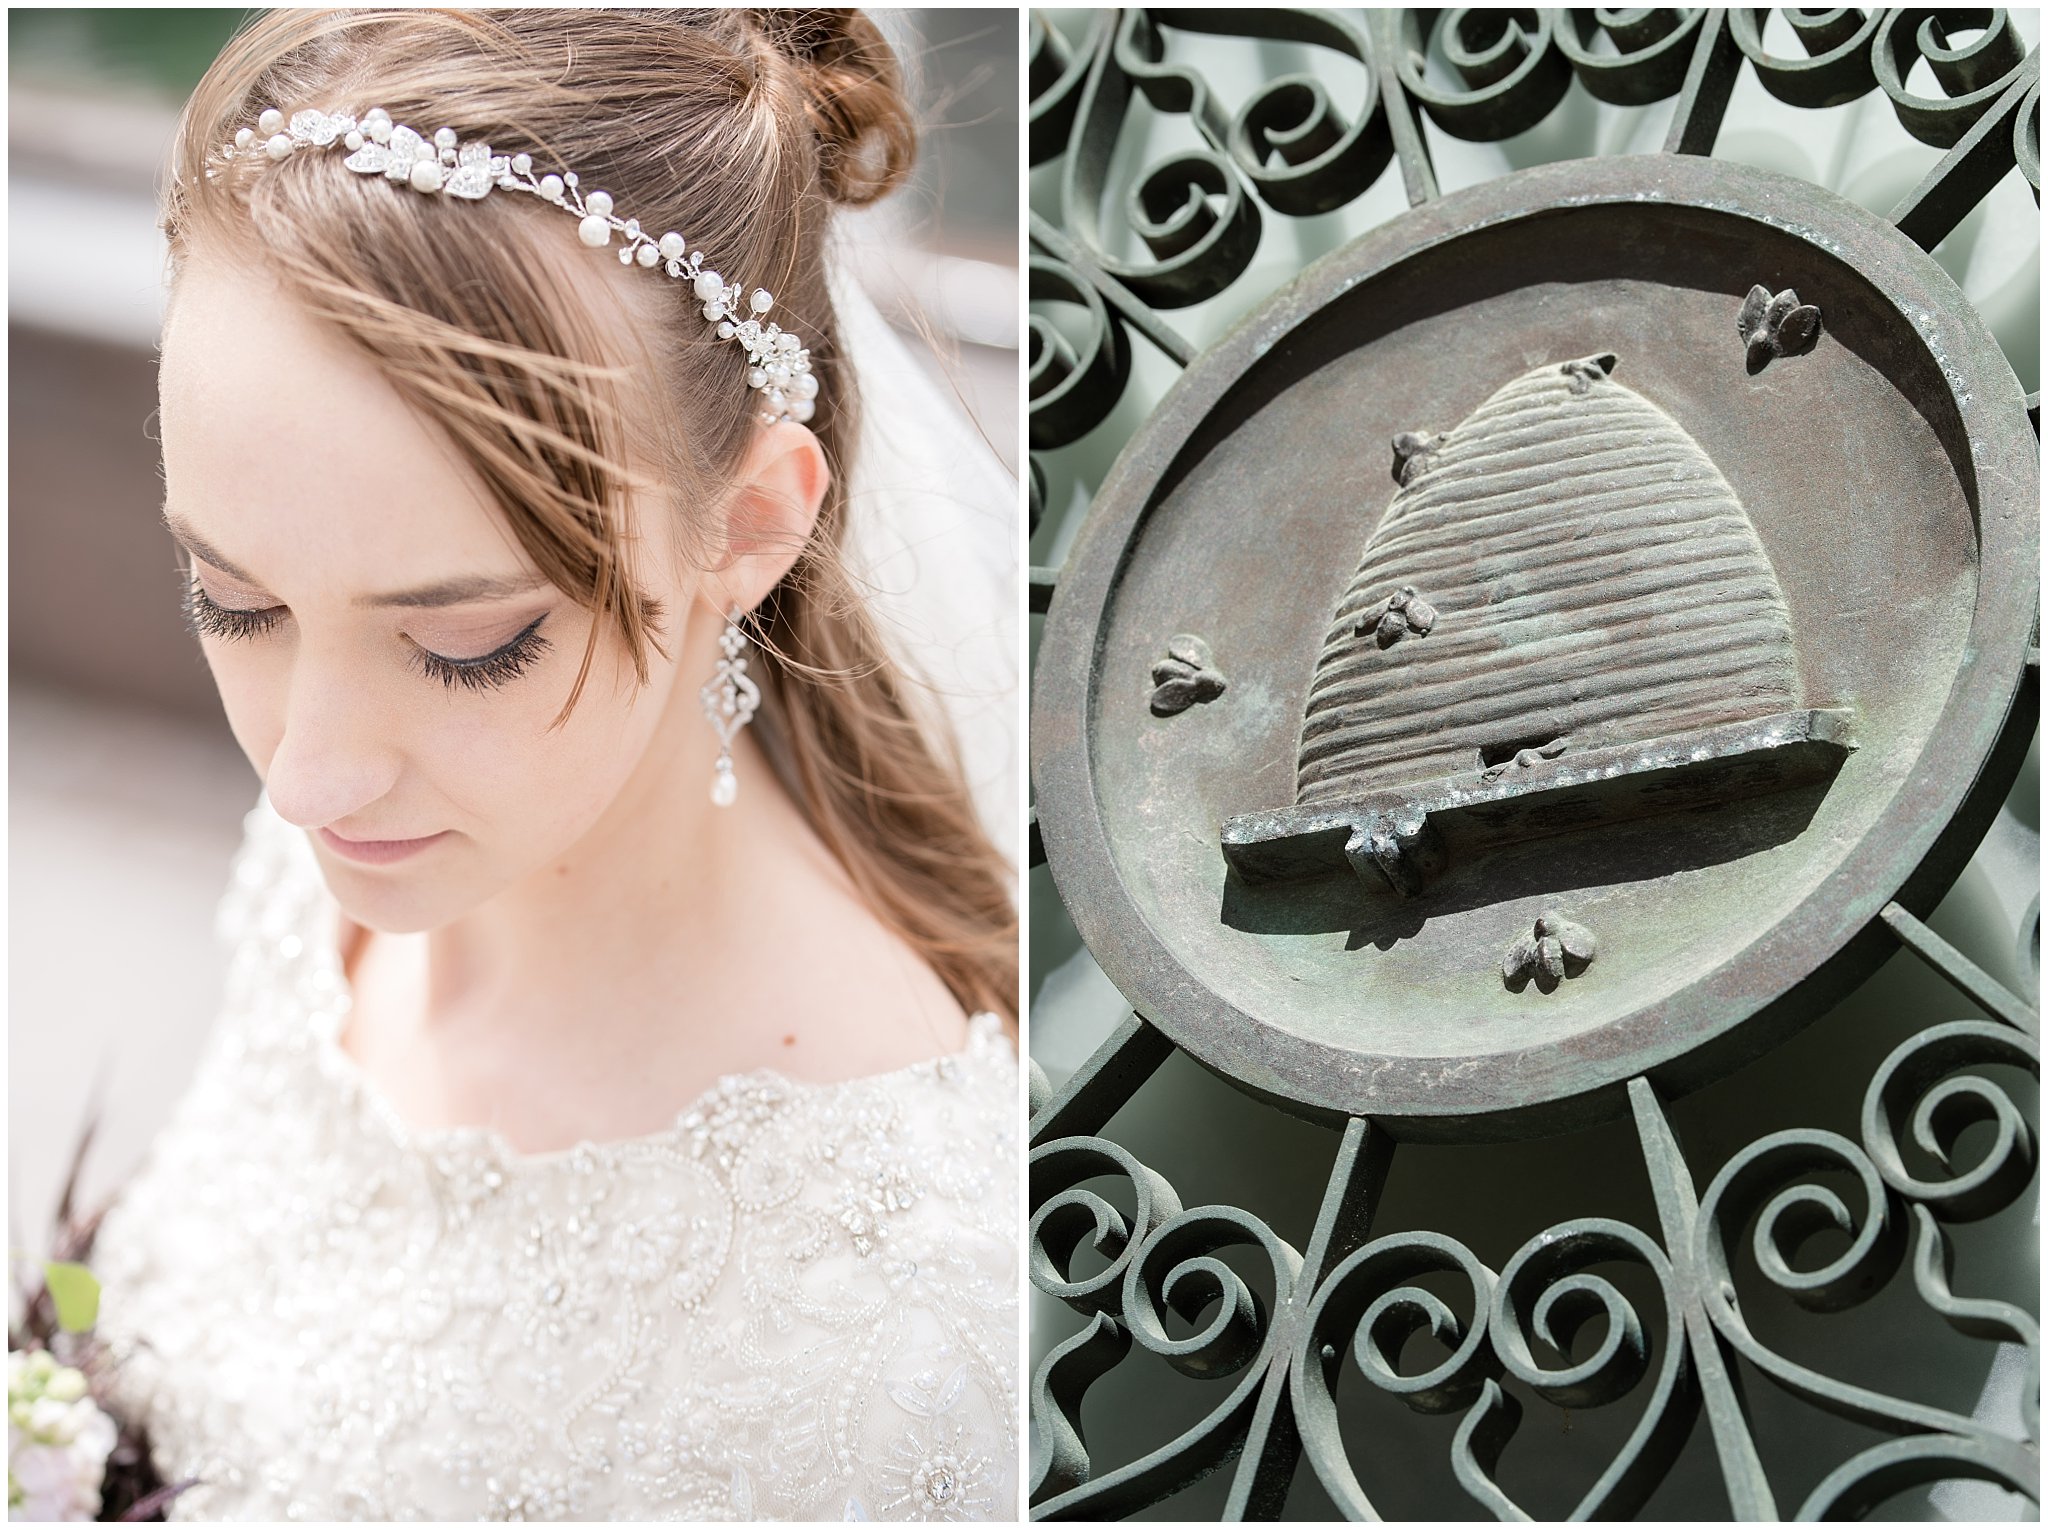 Salt Lake temple wedding details | Bride headband and dress details | Jessie and Dallin Photography